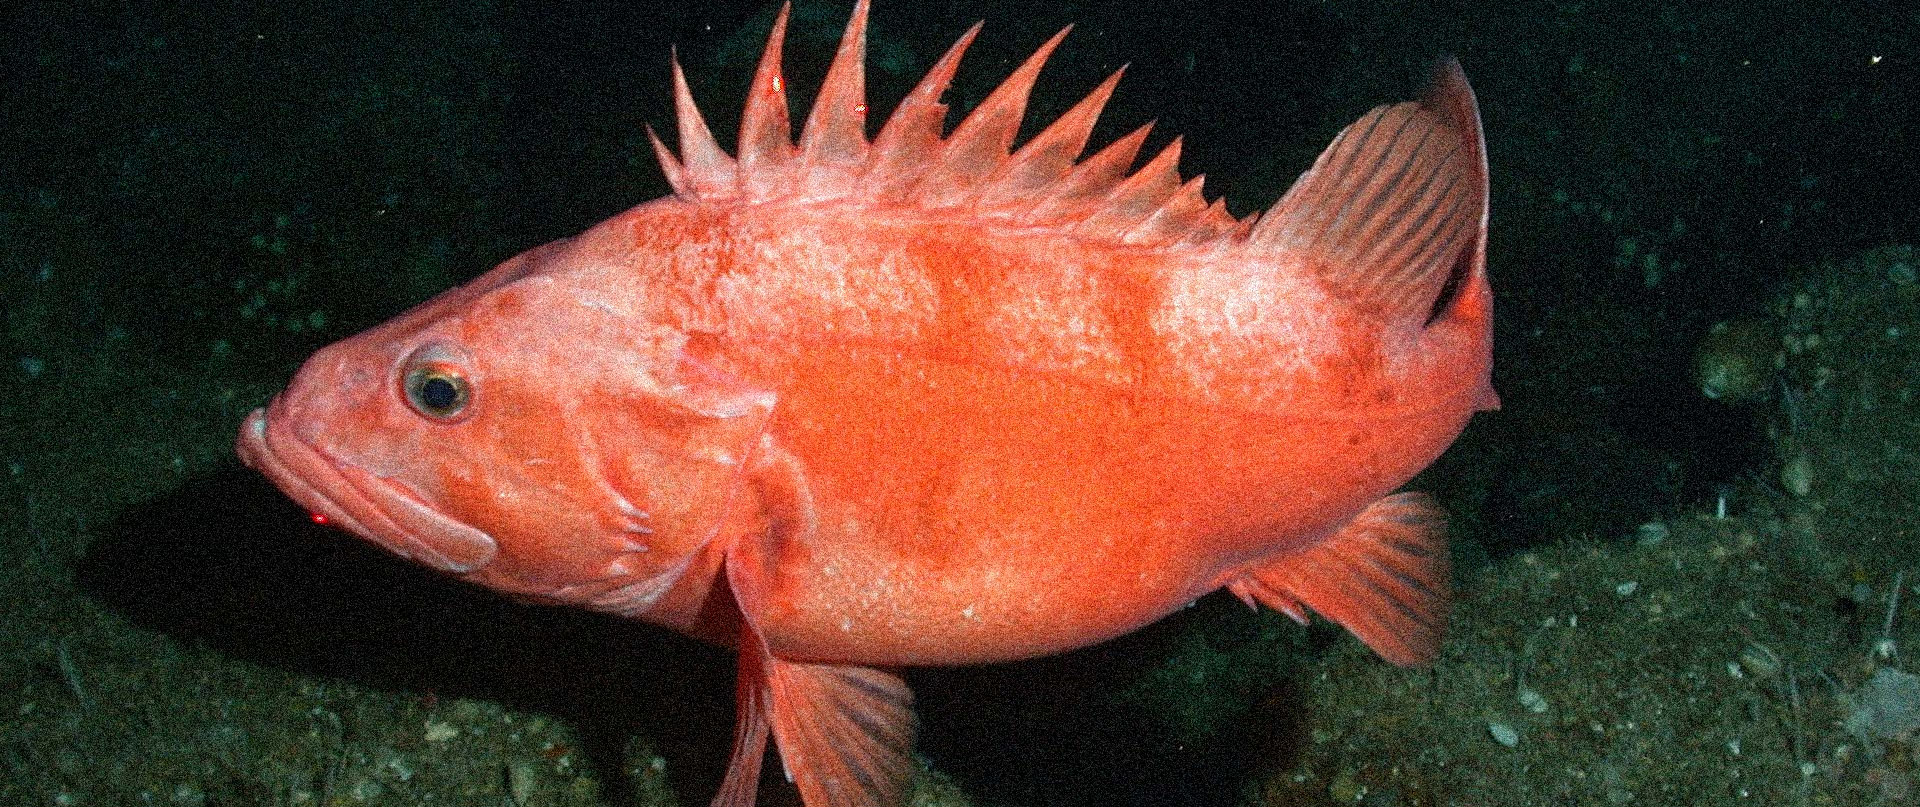 School of Fish - Species Encyclopedia - Tradex Foods Inc